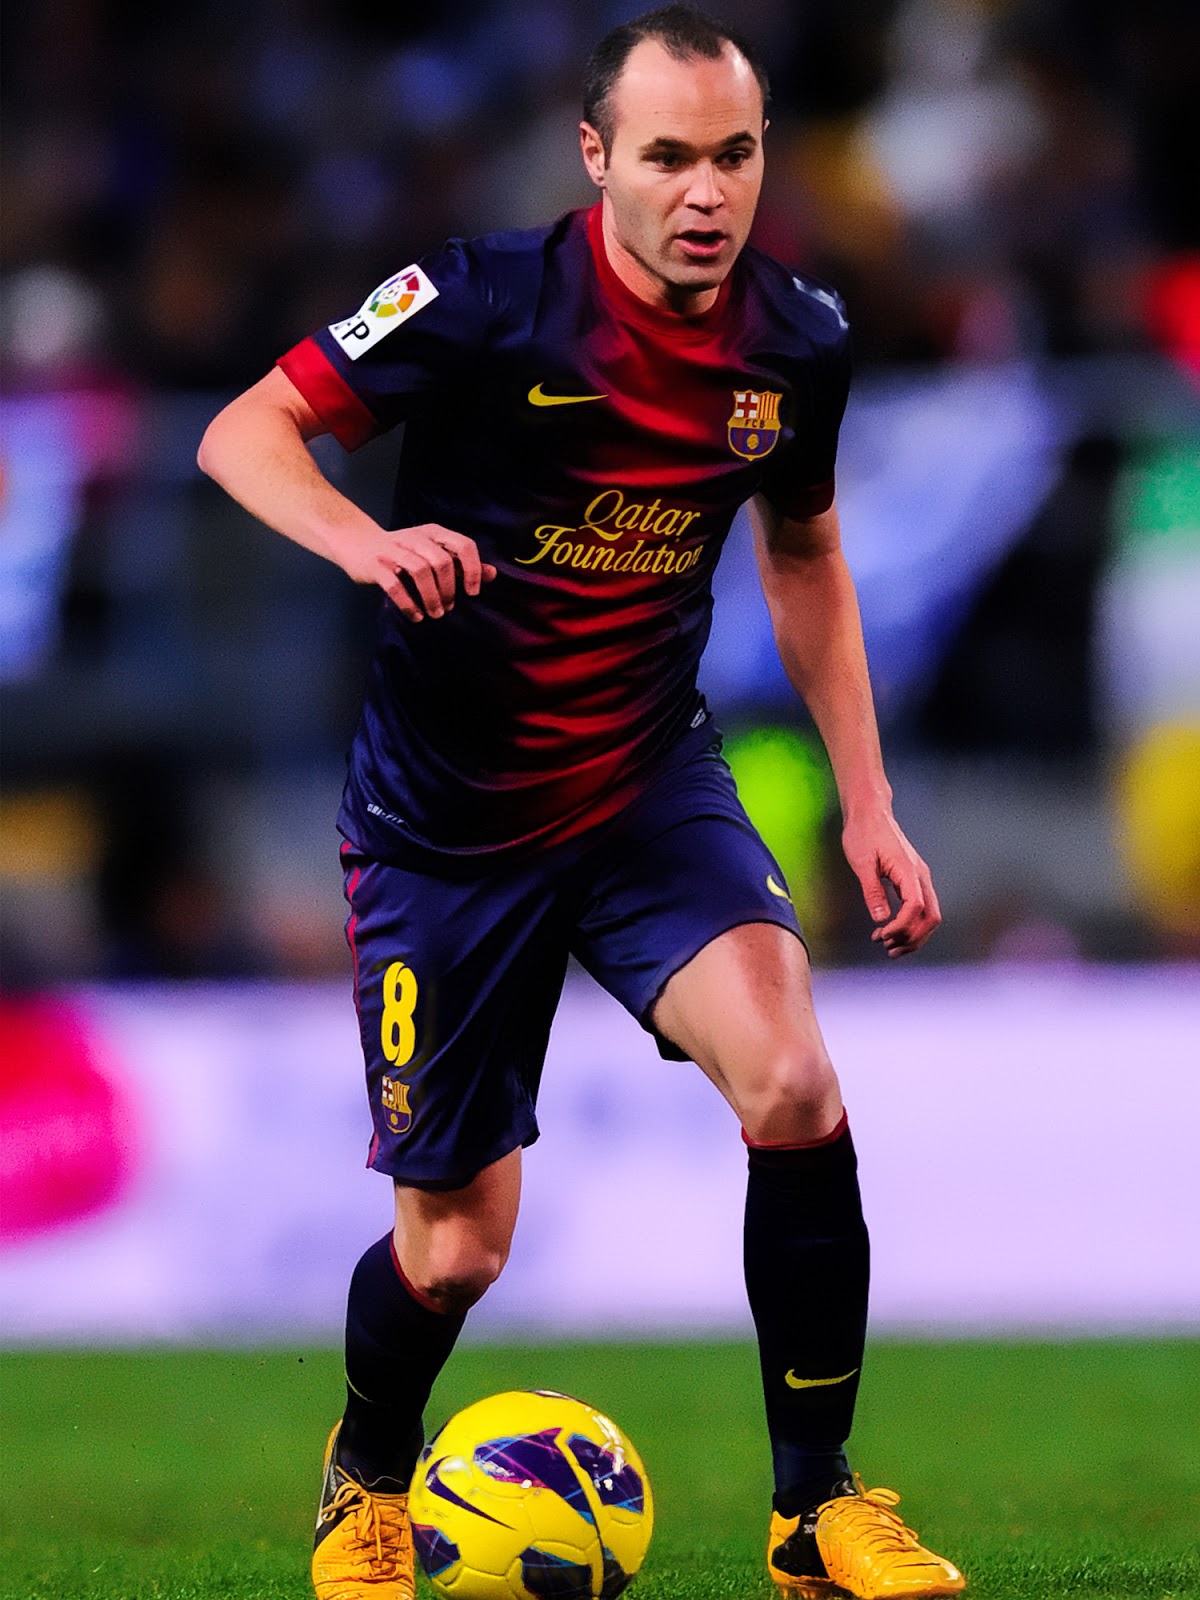 Andres Iniesta New FC Barcelona Club captain 2015 HD